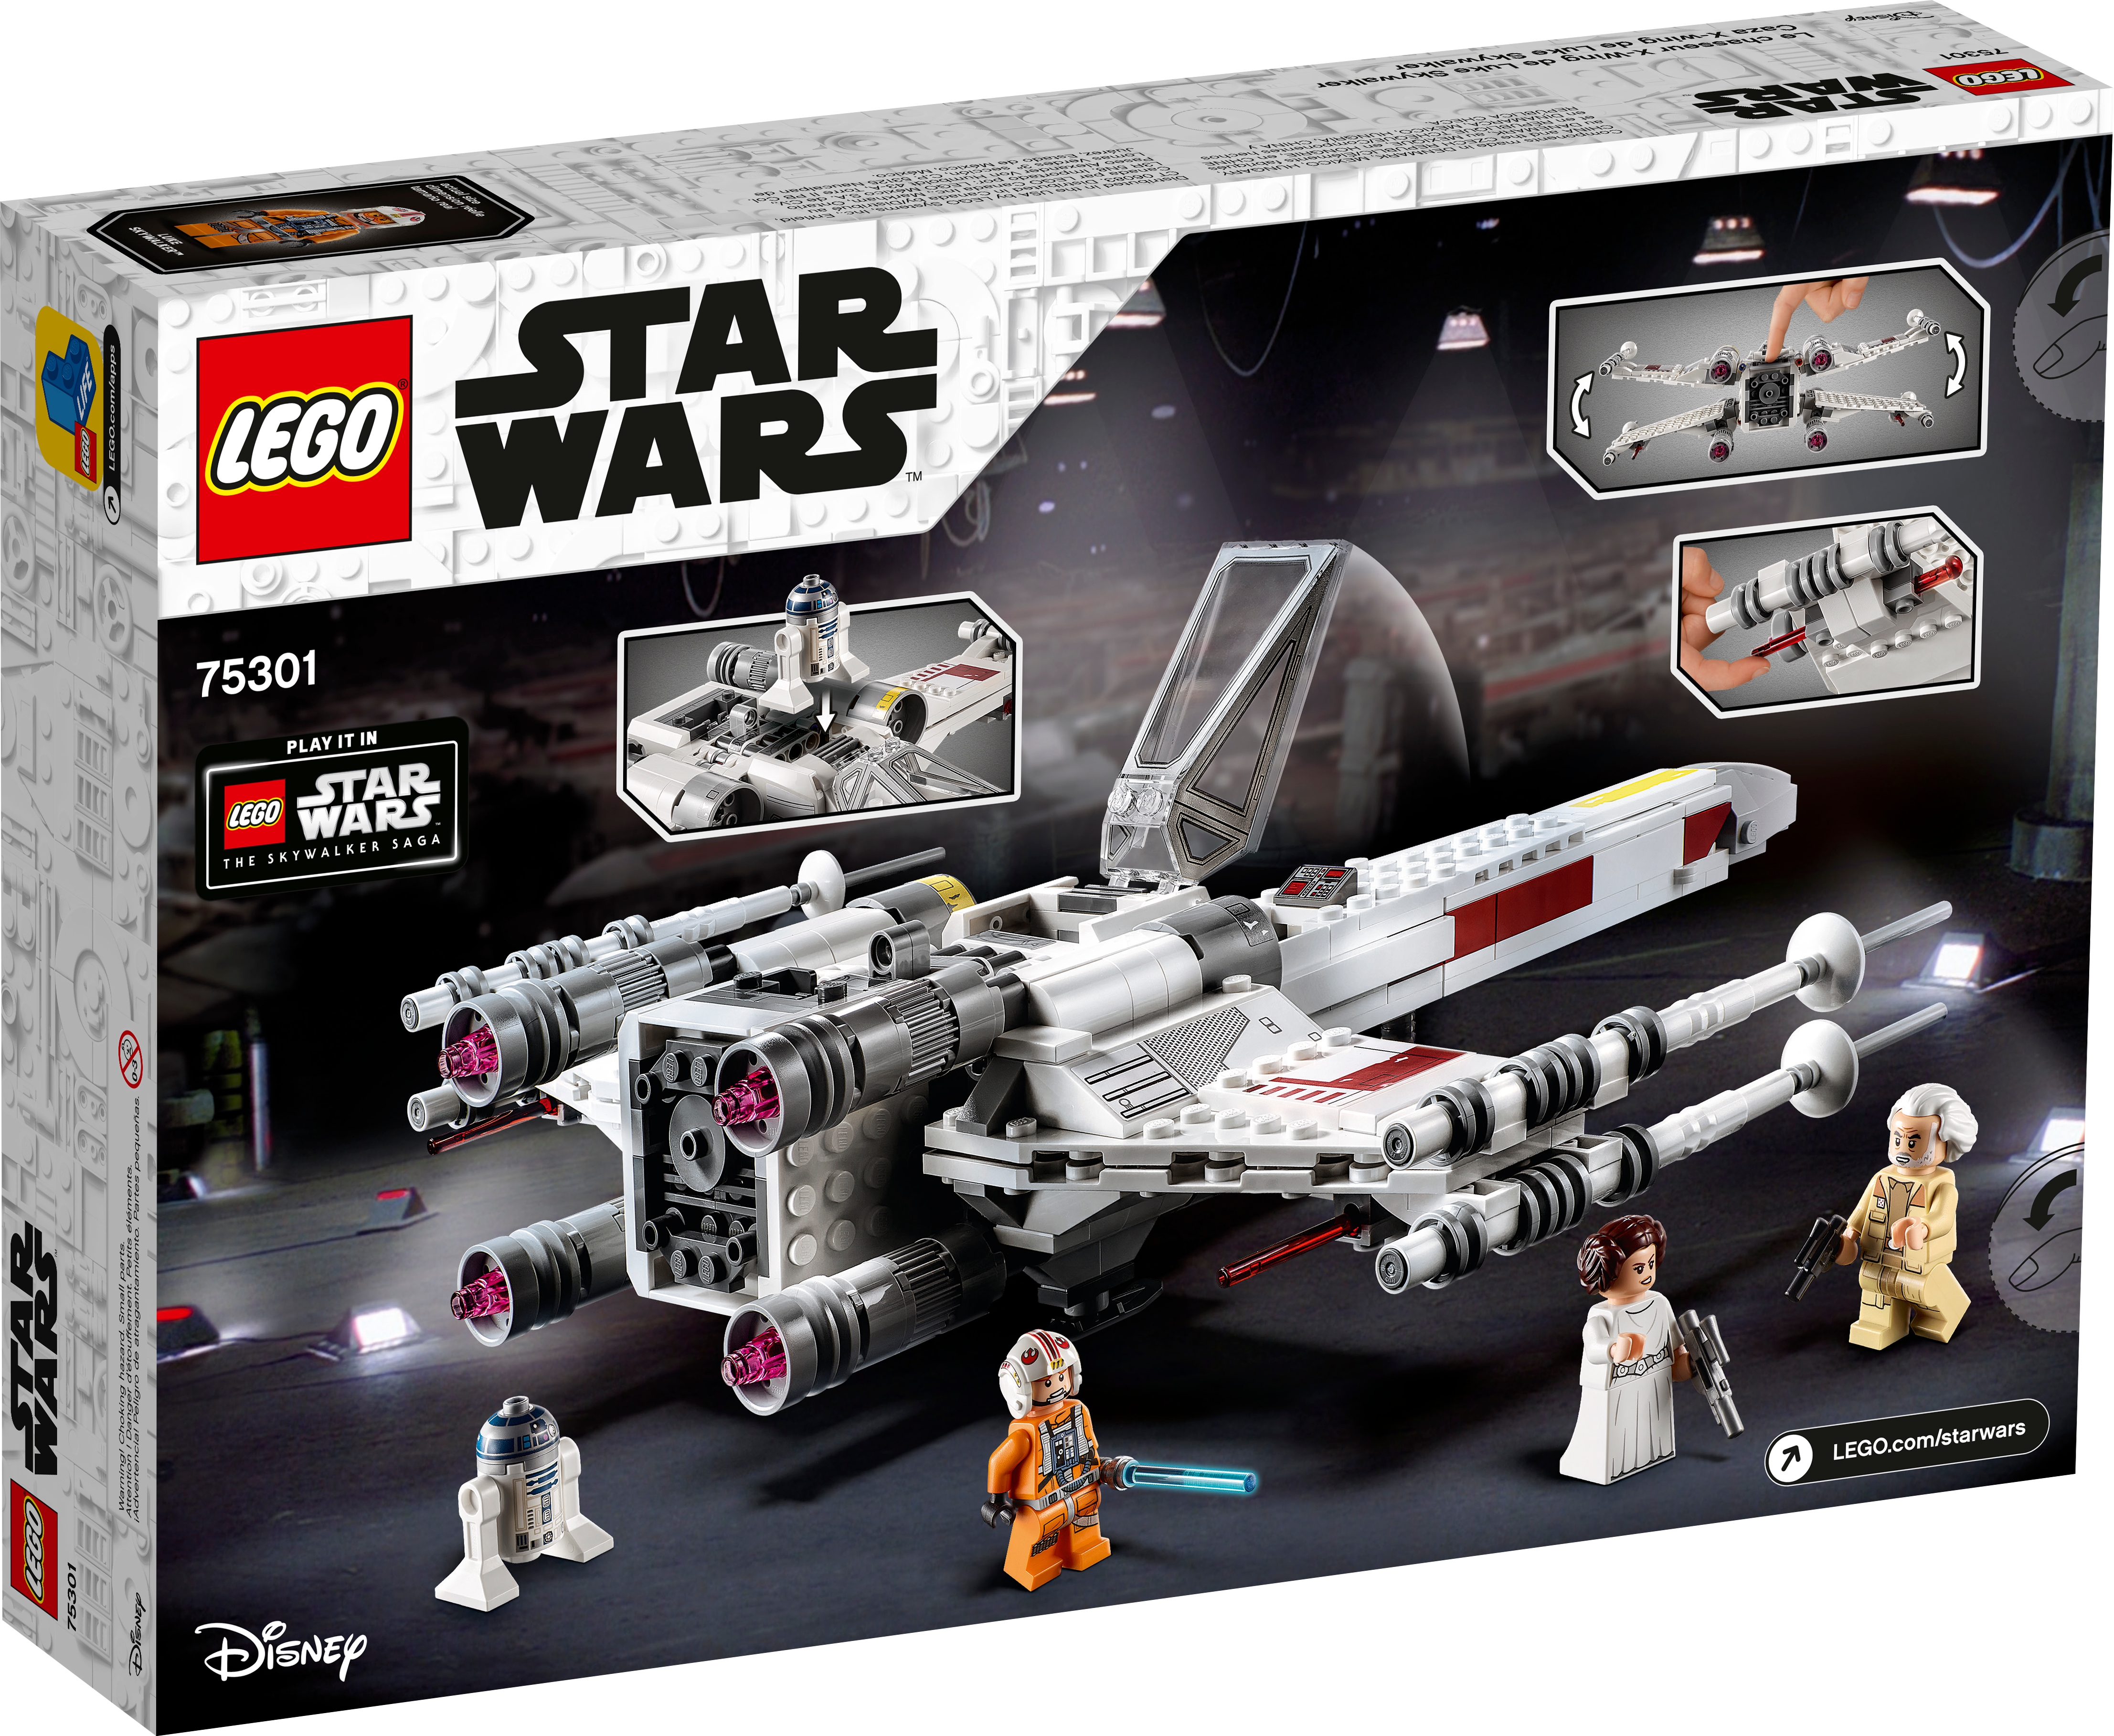 474 Pieces LEGO Star Wars Luke Skywalker’s X-Wing Fighter 75301 Building Kit for sale online